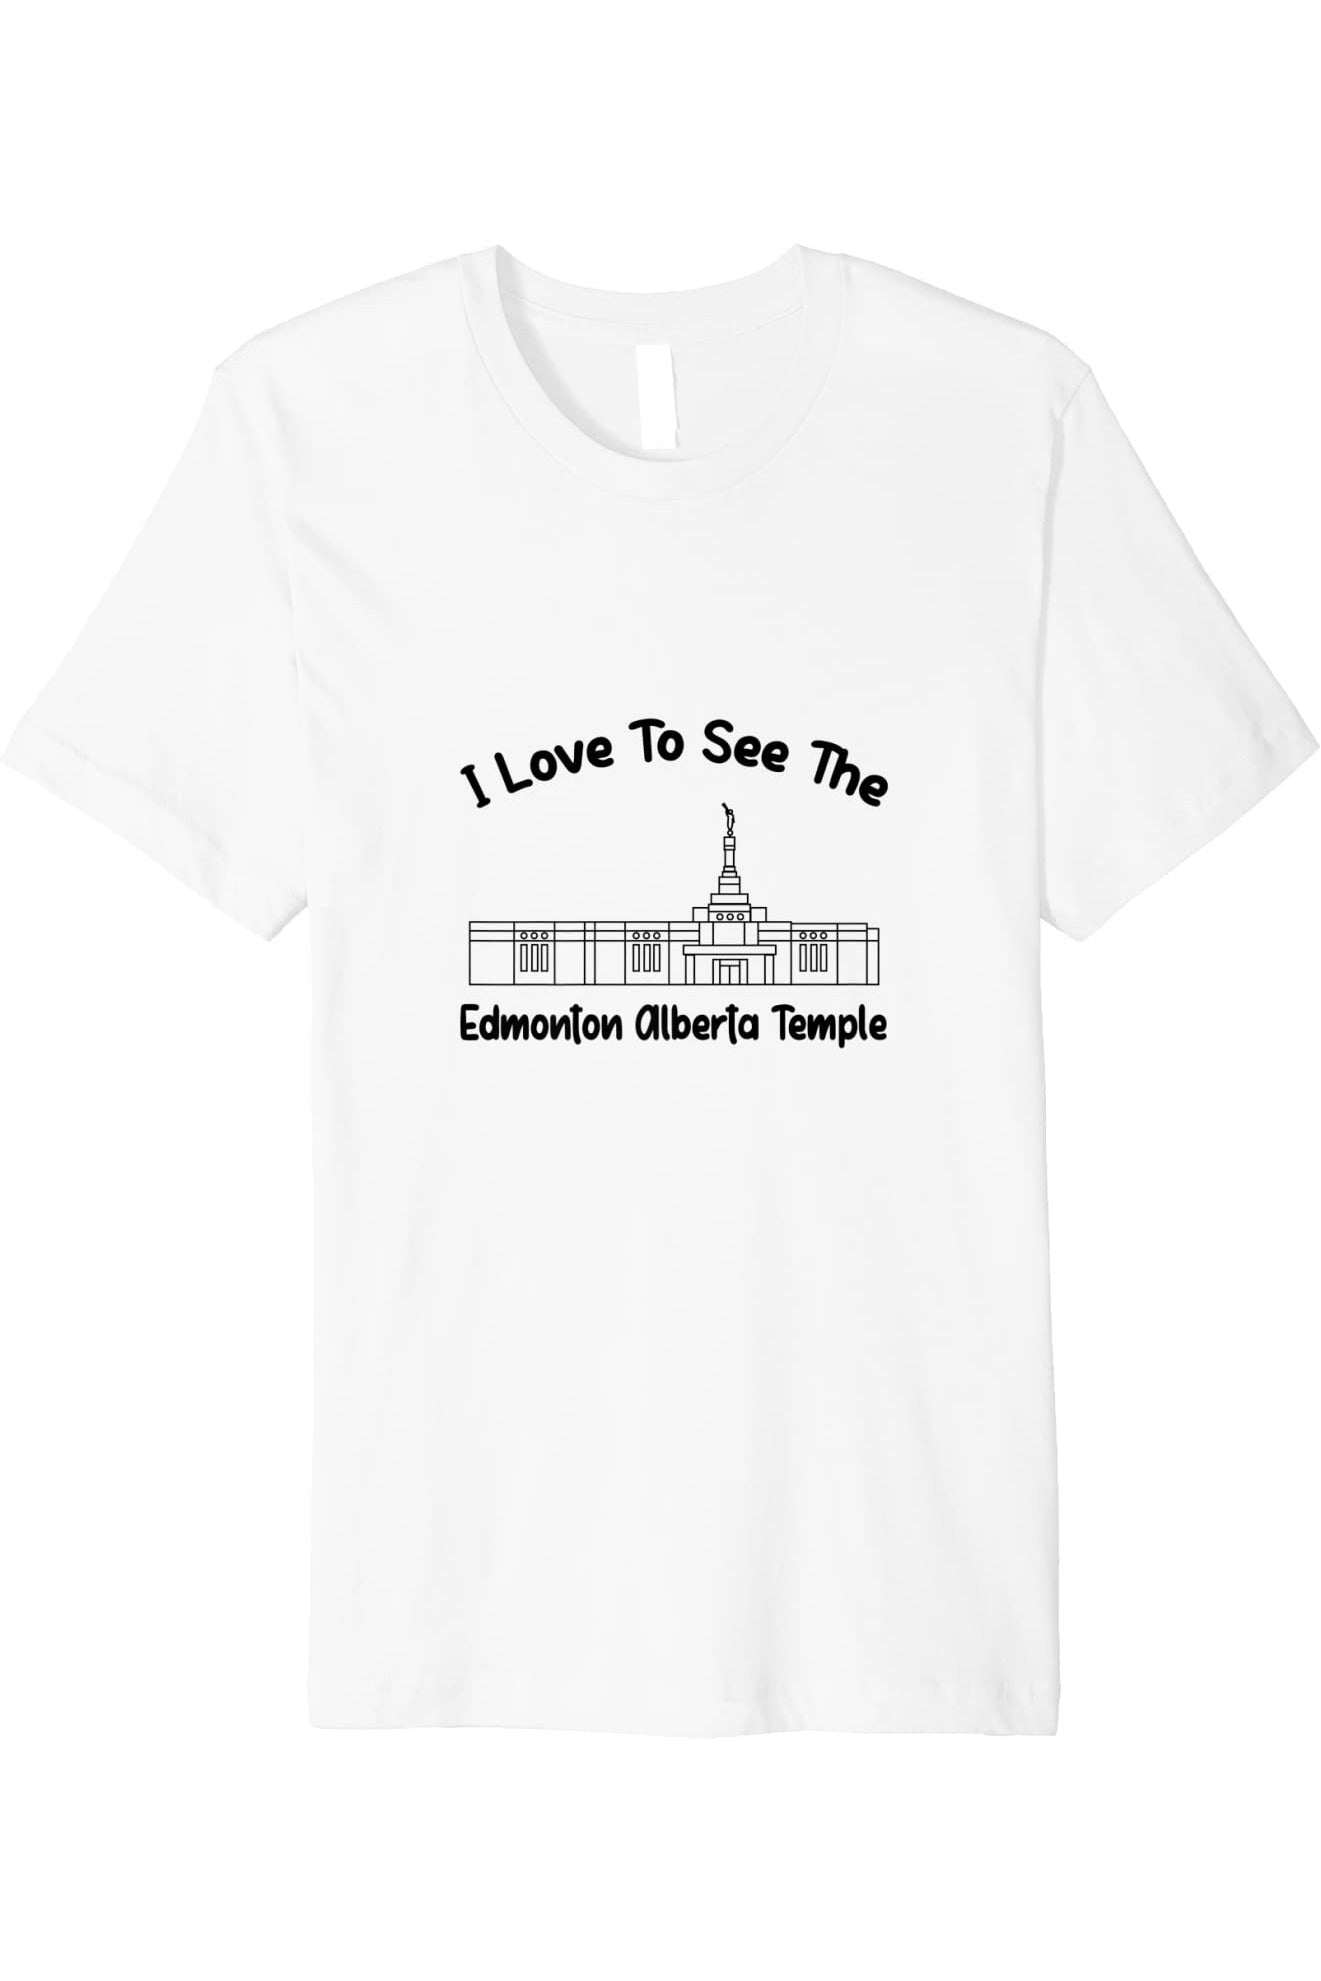 Edmonton Alberta Temple T-Shirt - Premium - Primary Style (English) US